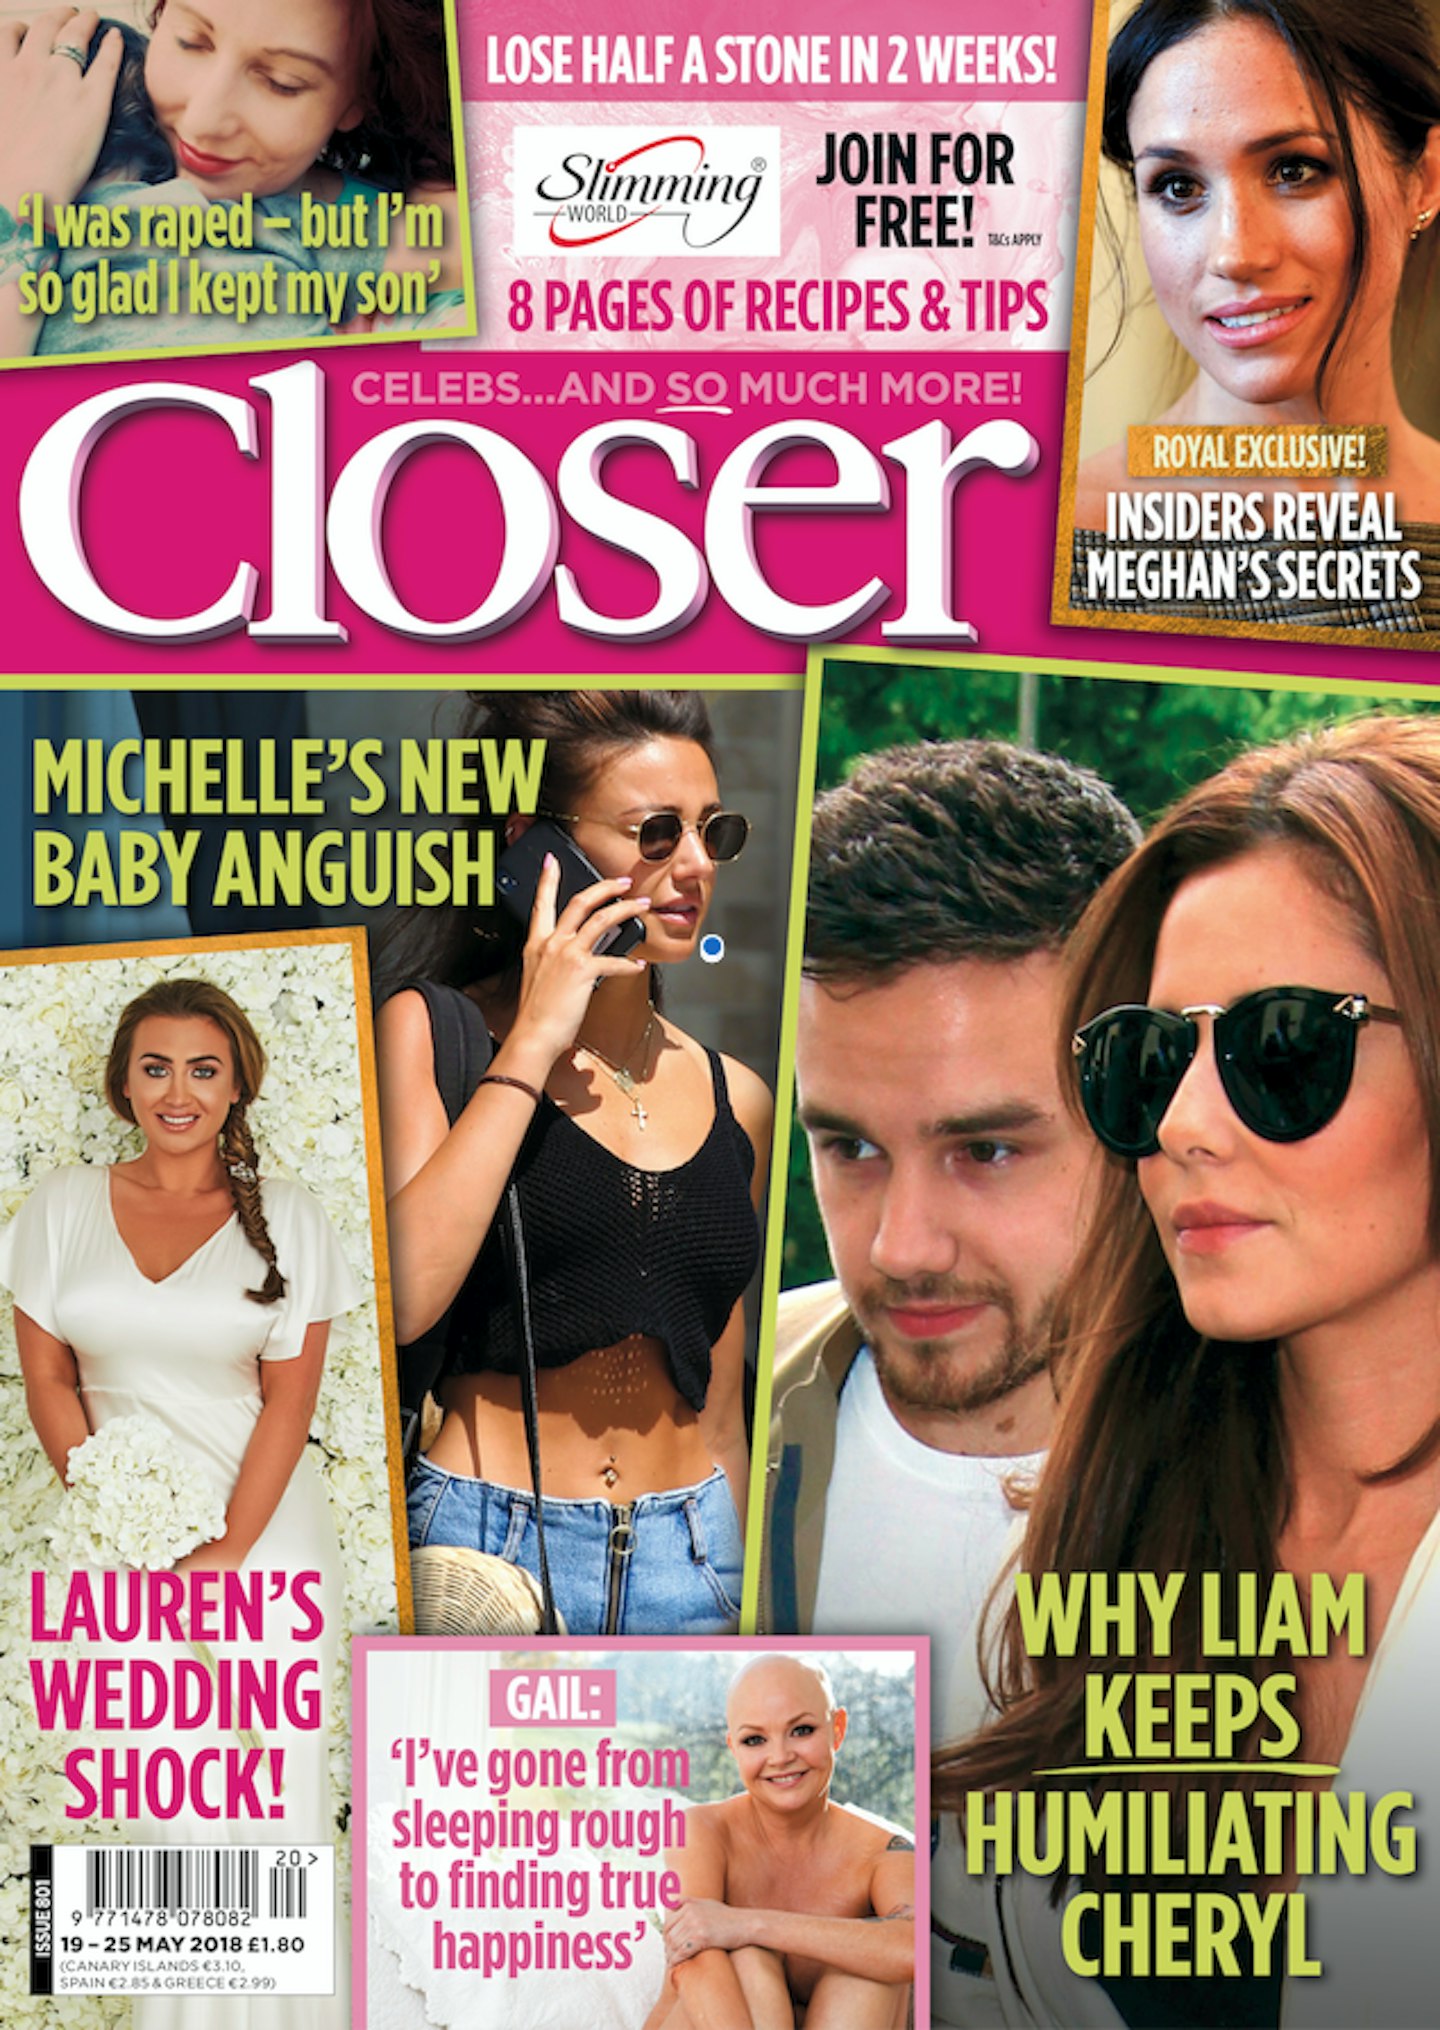 Buy this week's Closer magazine